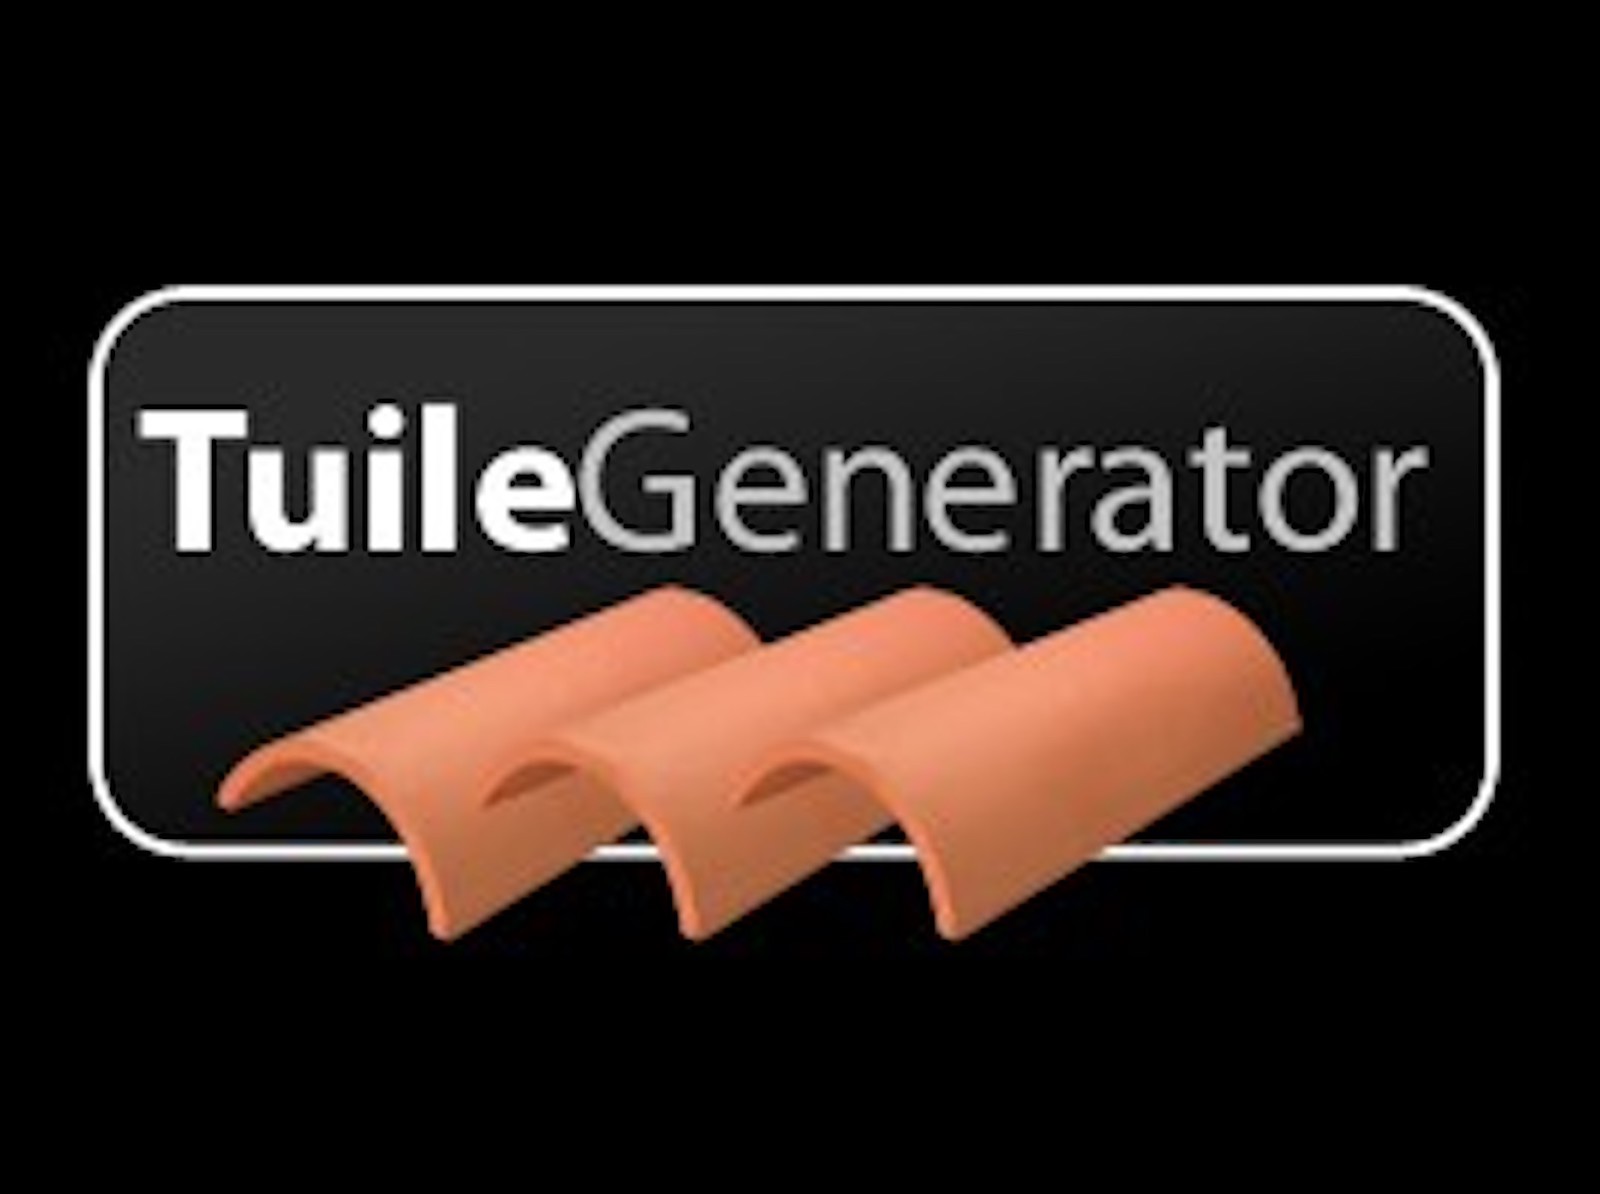 TuileGenerator is back!